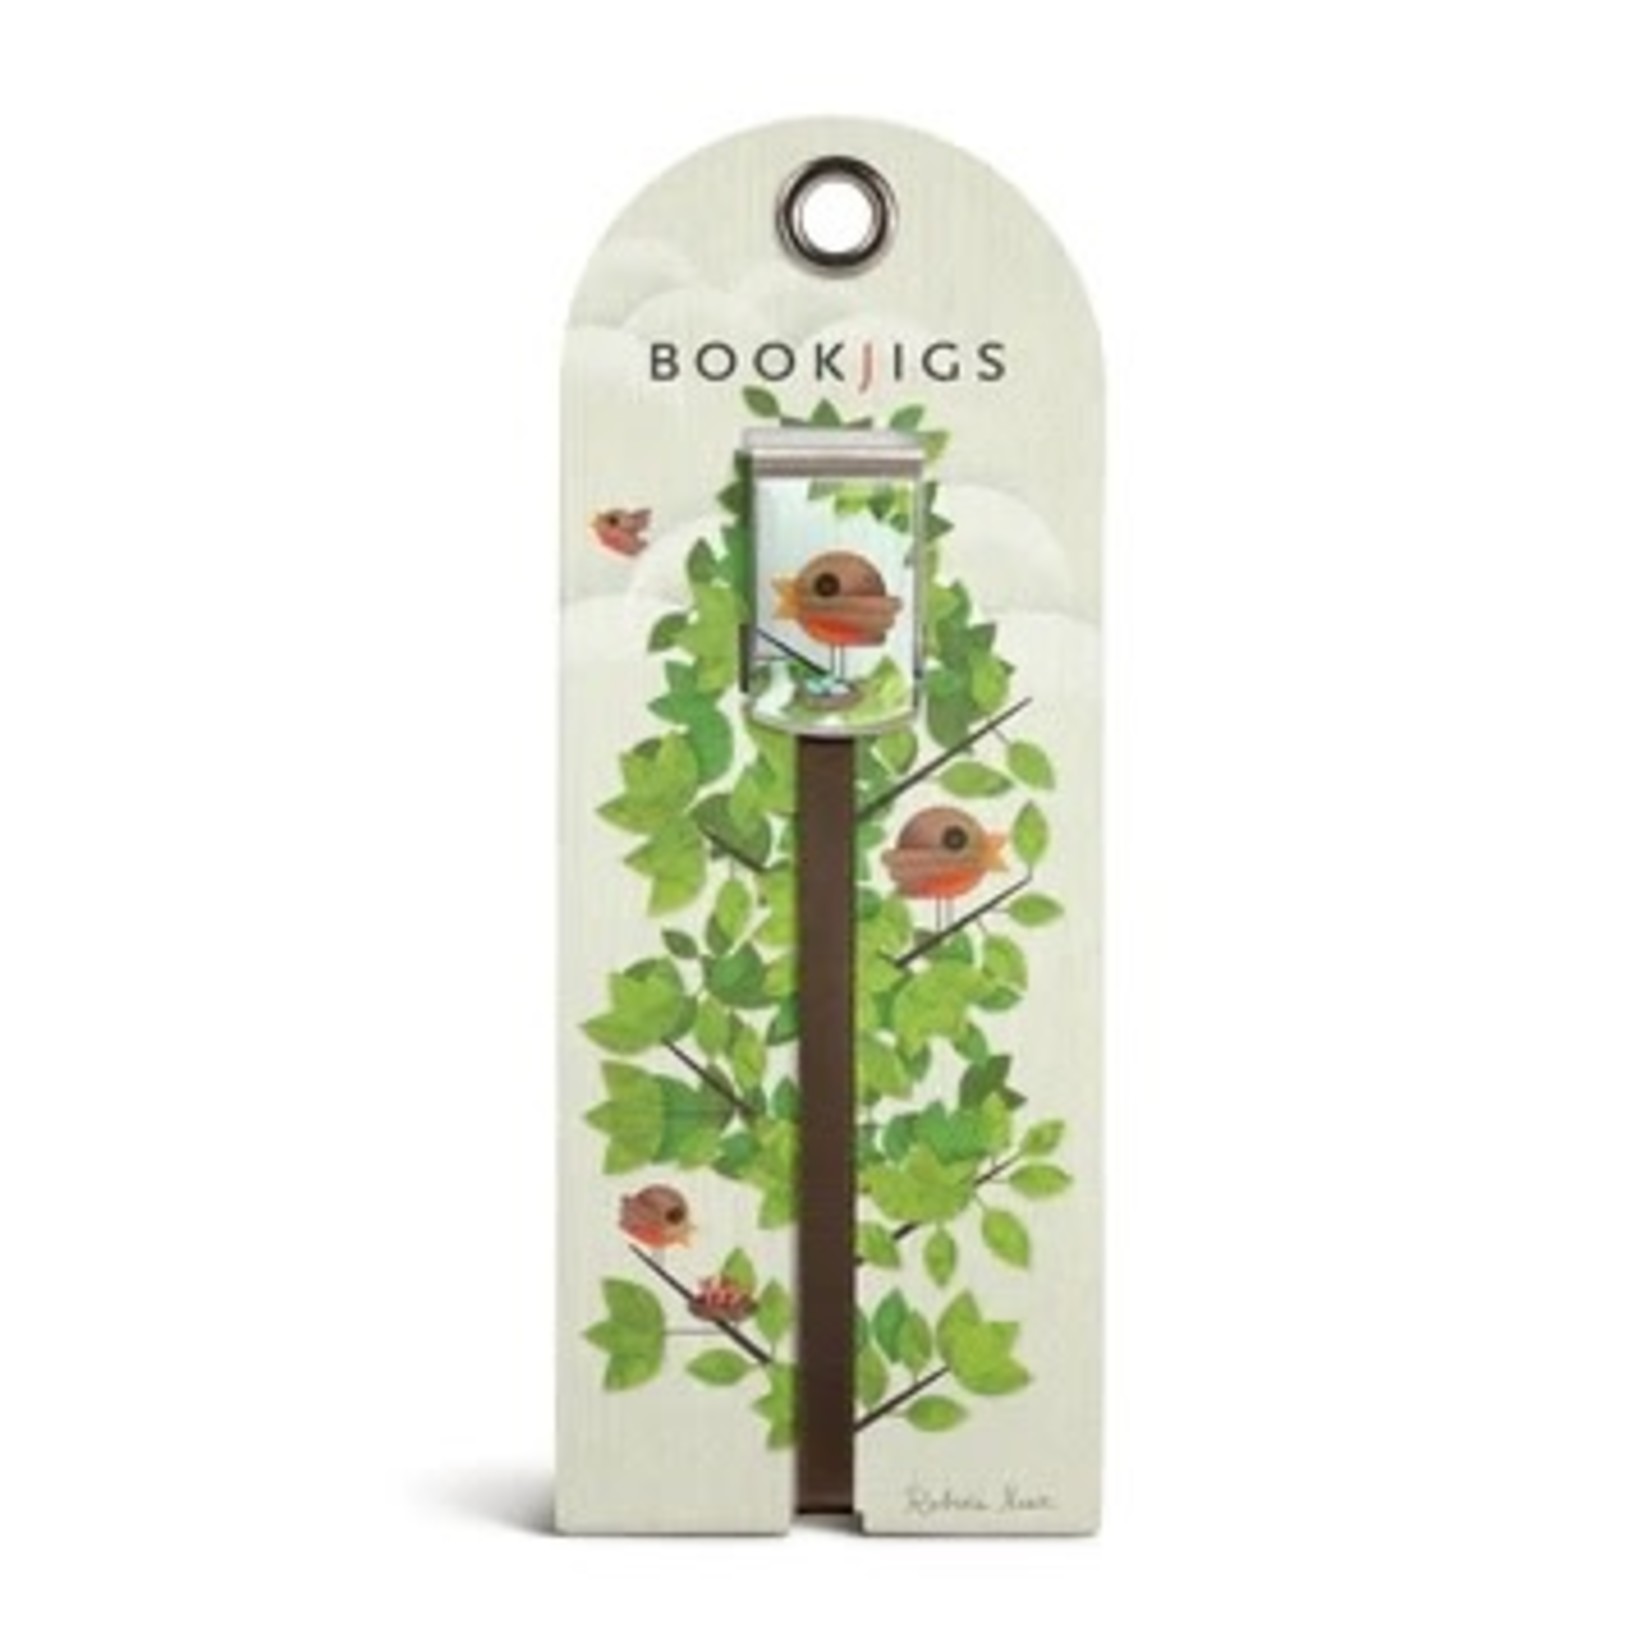 Bookjigs Bookmark - Robins Nest